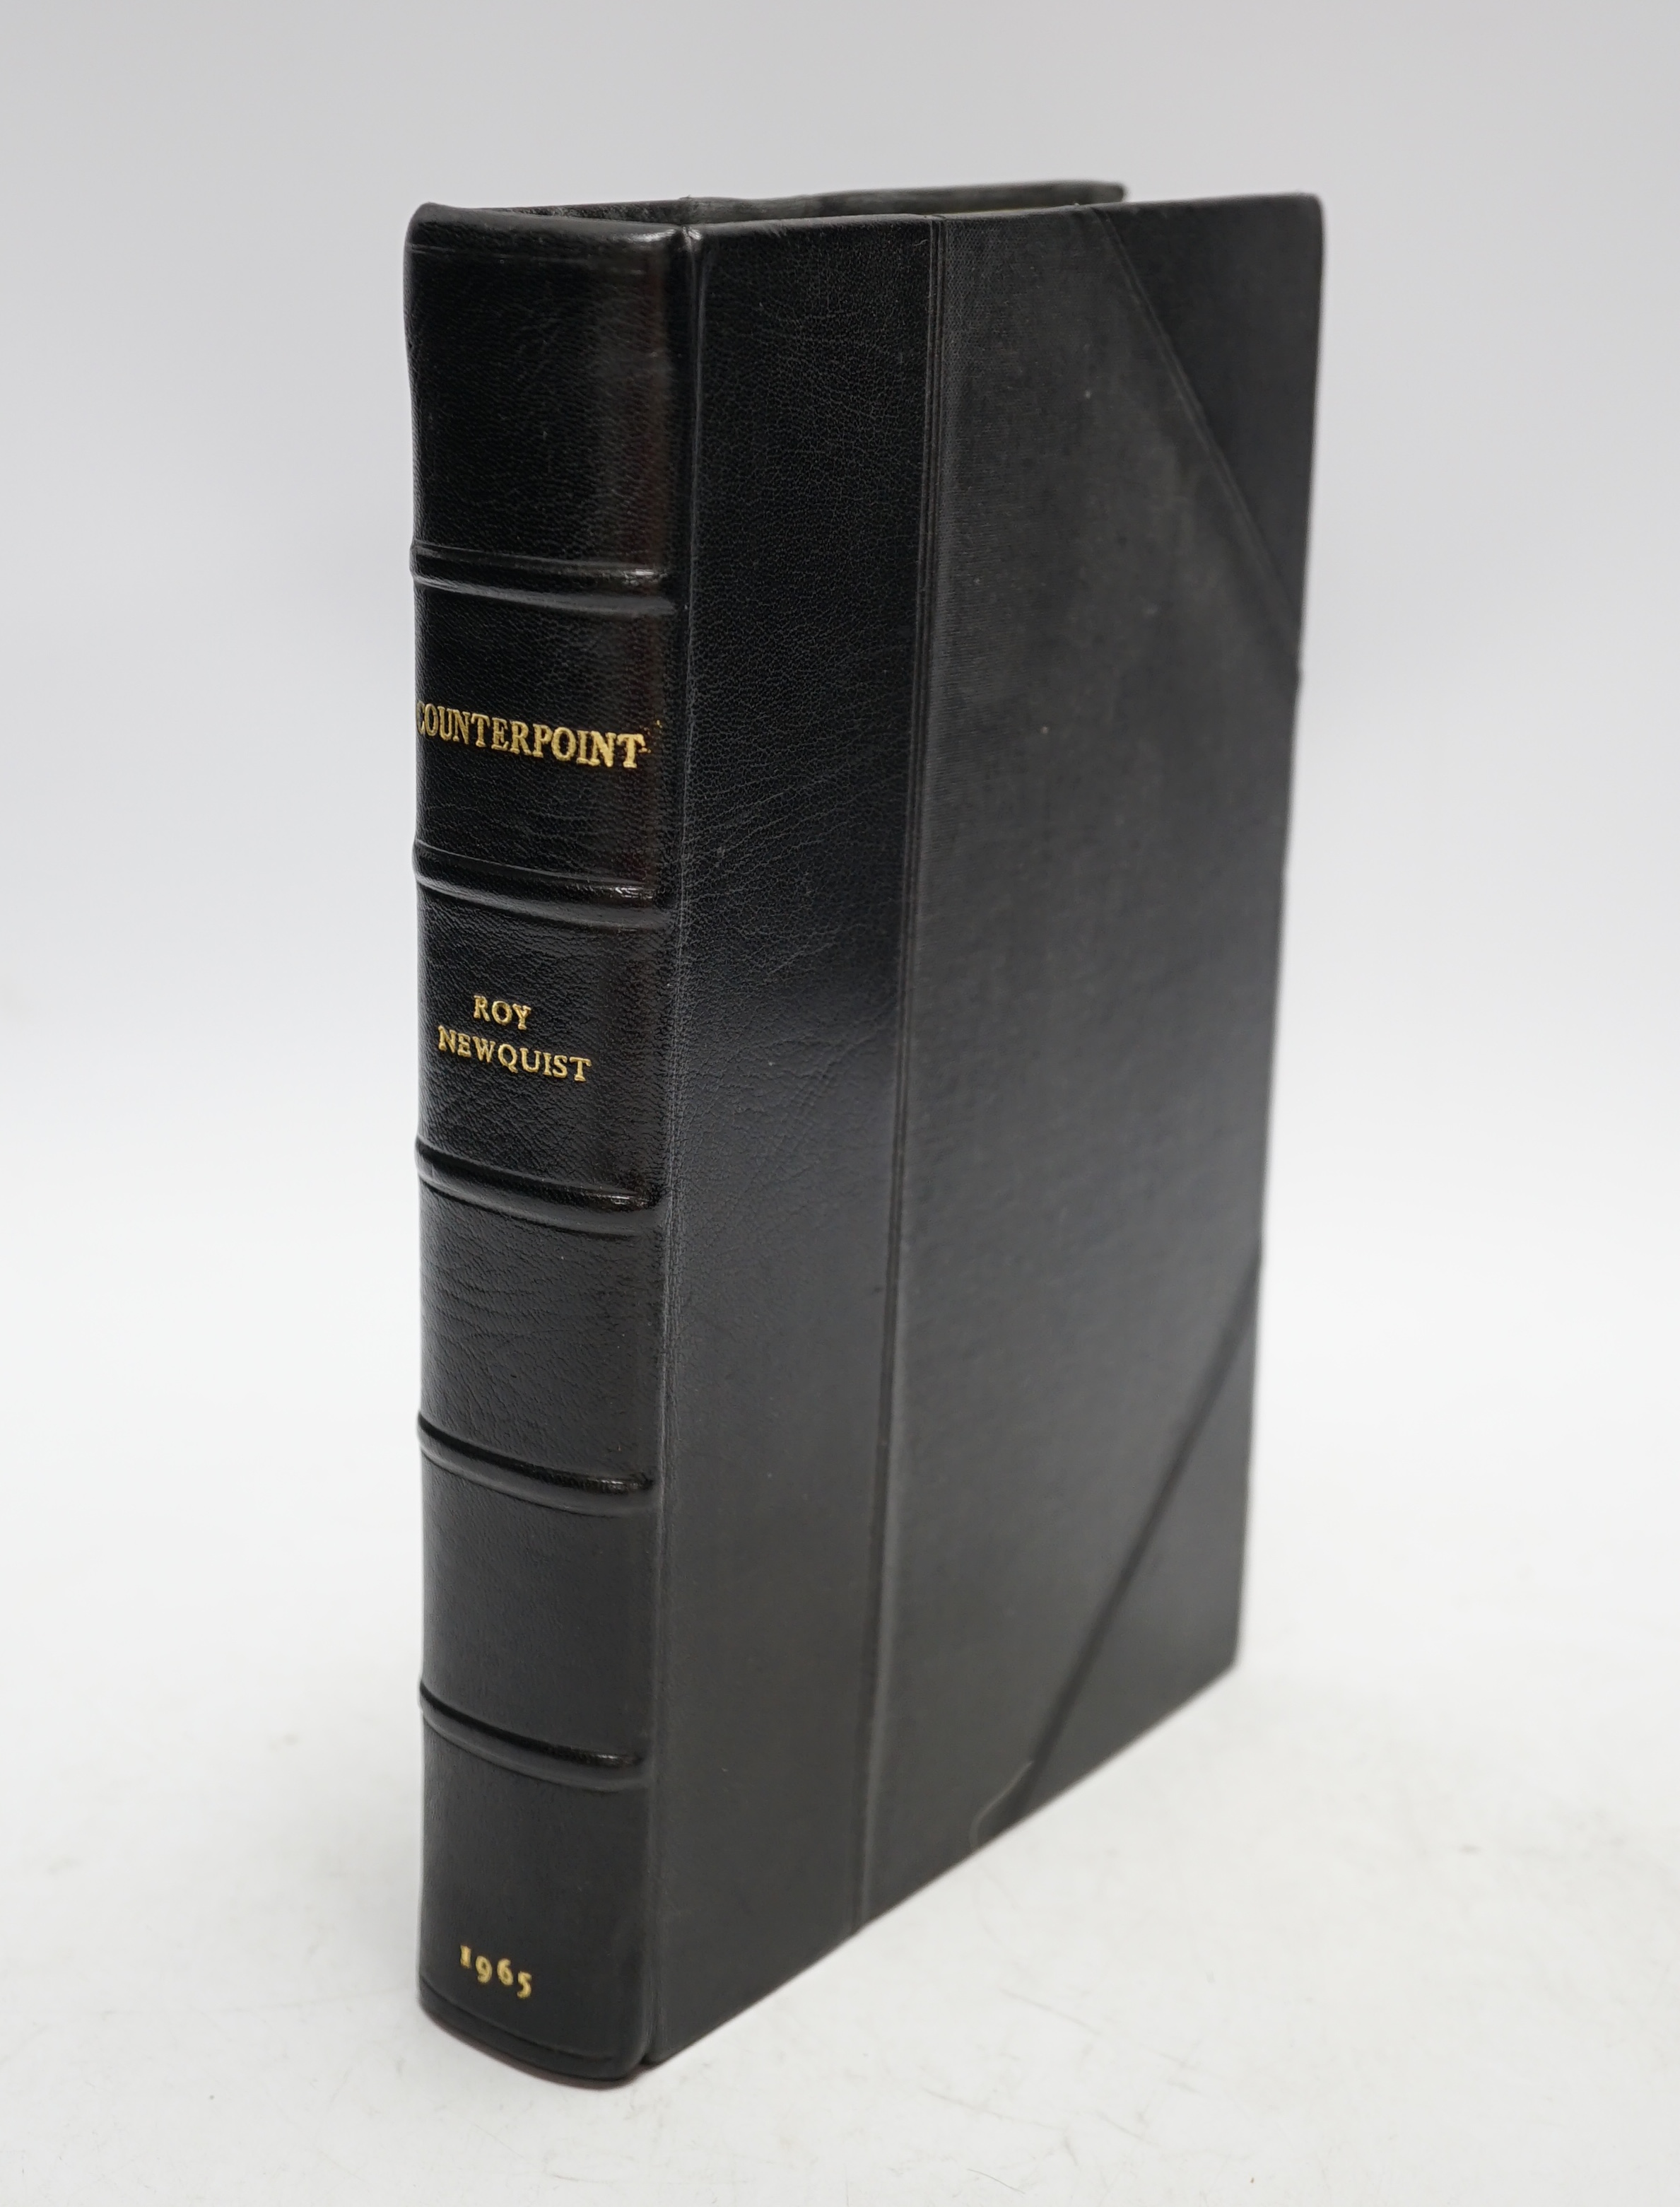 Book: R. Newquist - Counterpart -1 volume